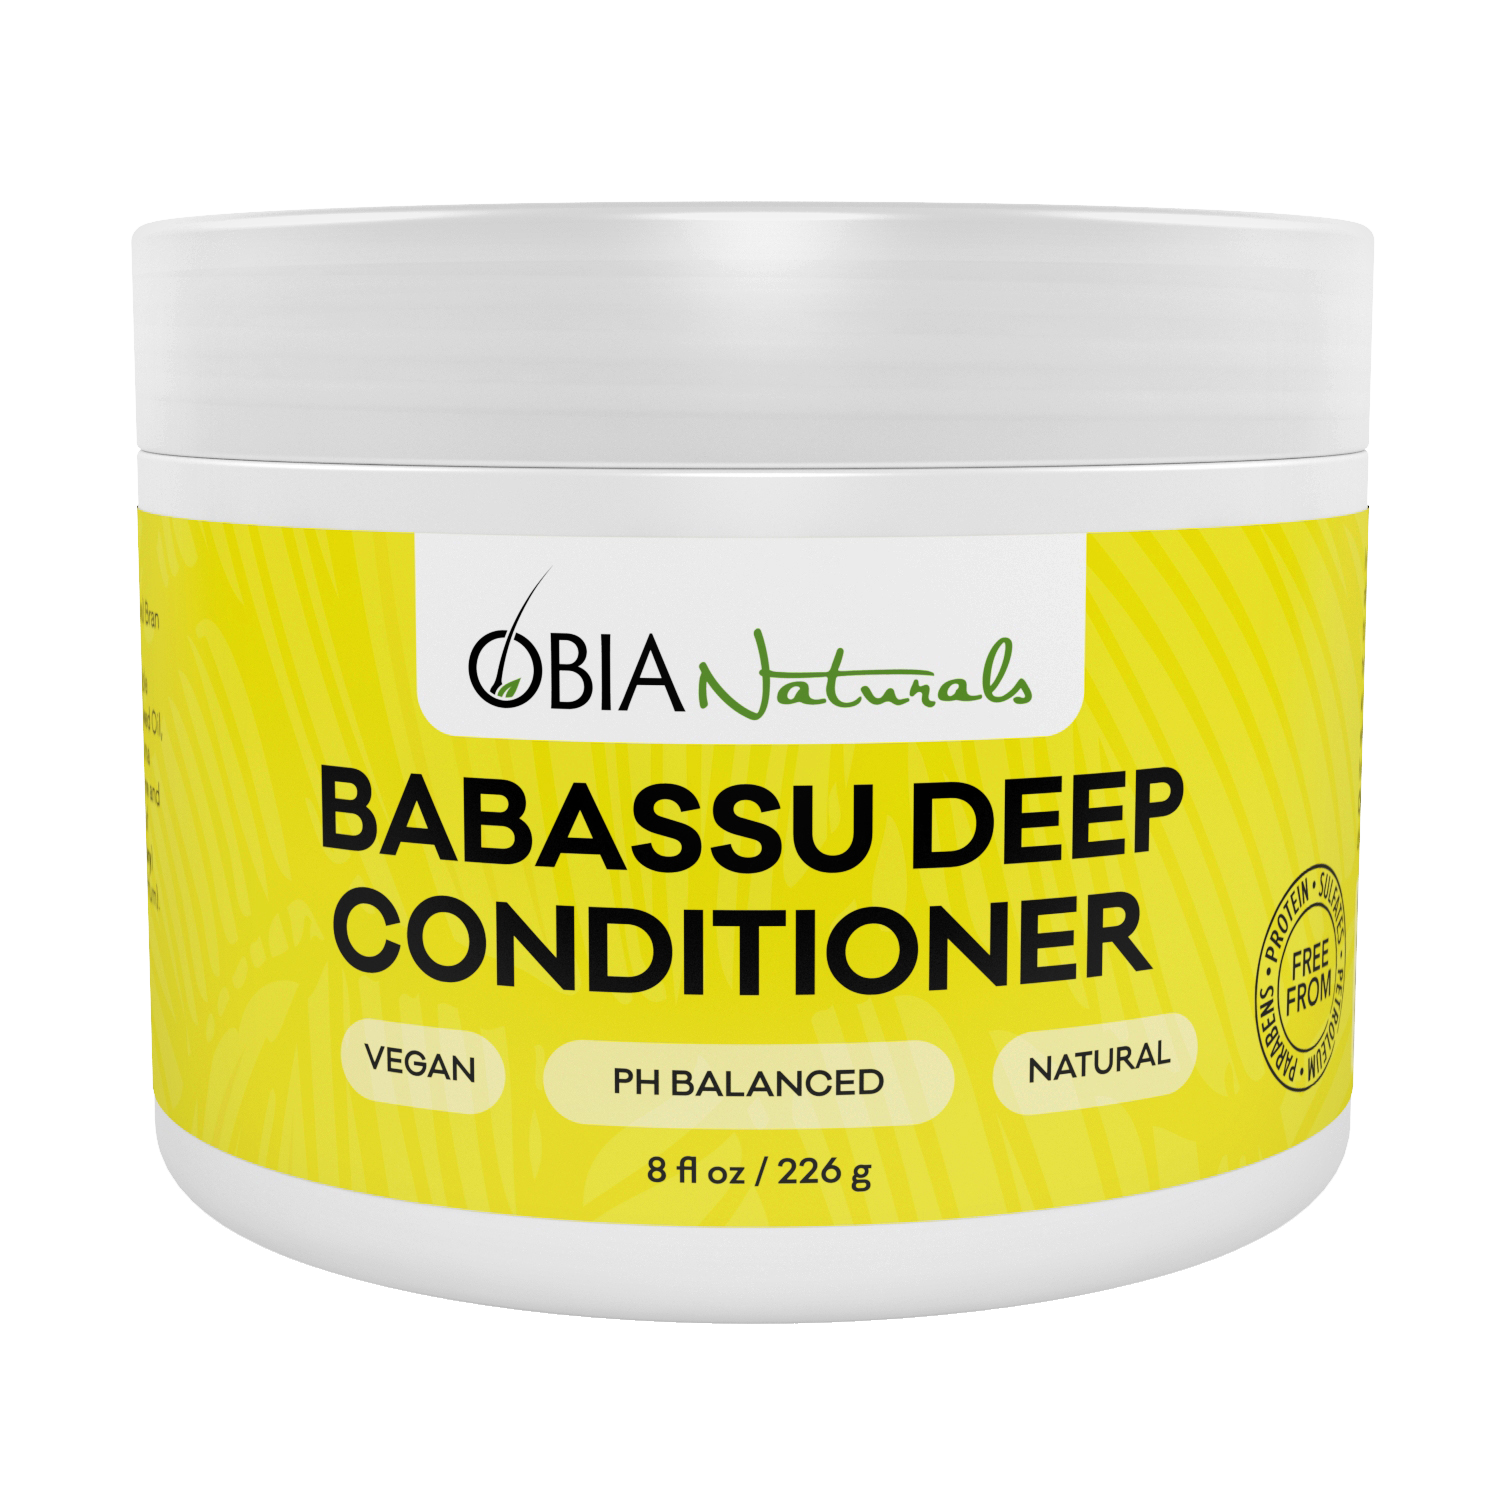 OBIA Naturals Babassu Oil Deep Conditioner